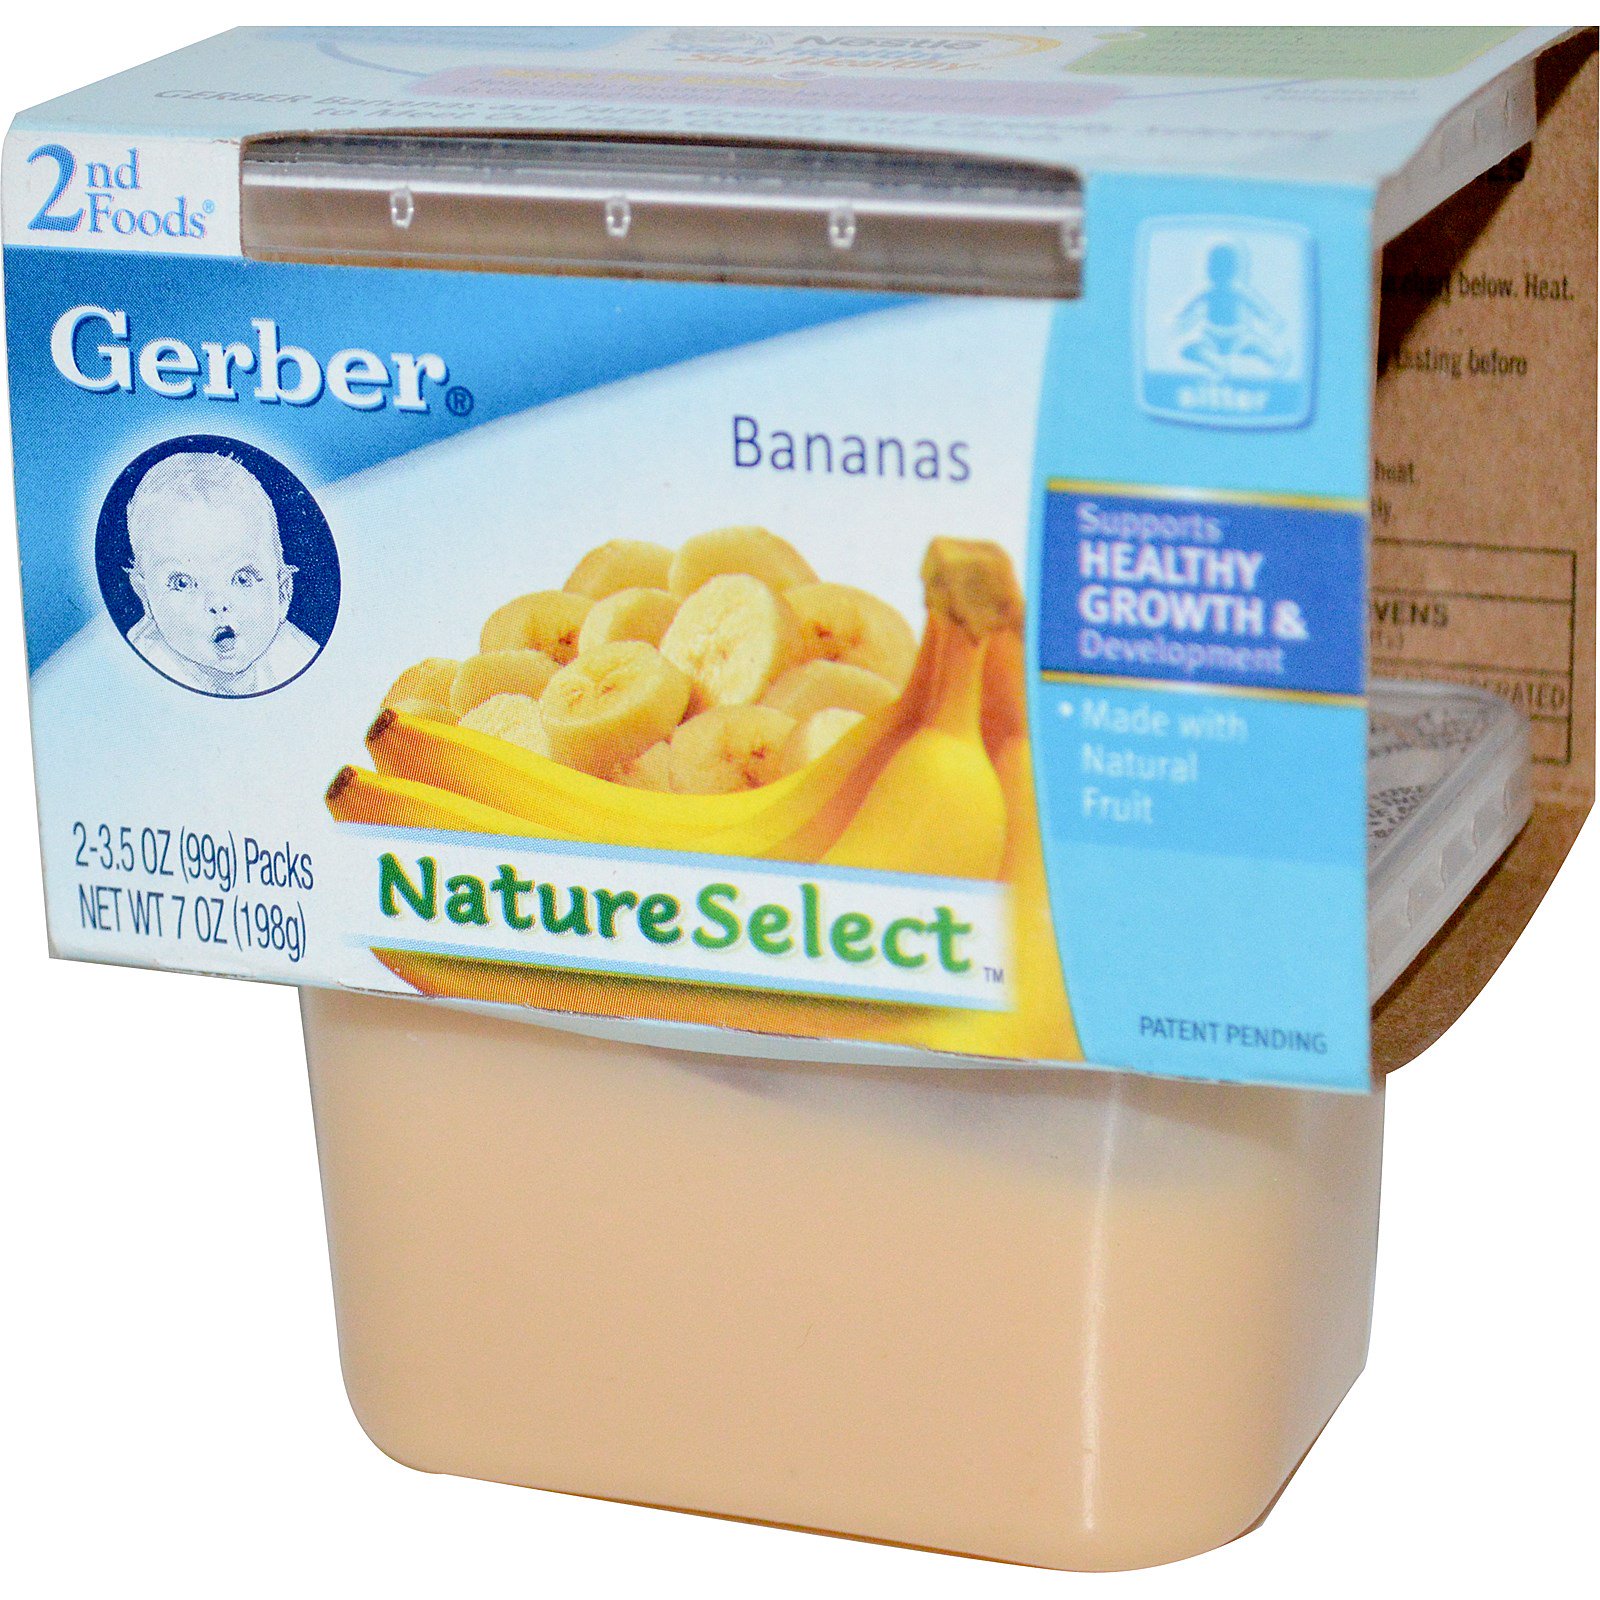 Gerber, 2nd Foods, NatureSelect, Bananas, 2 Packs, 3.5 oz (99 g) Each